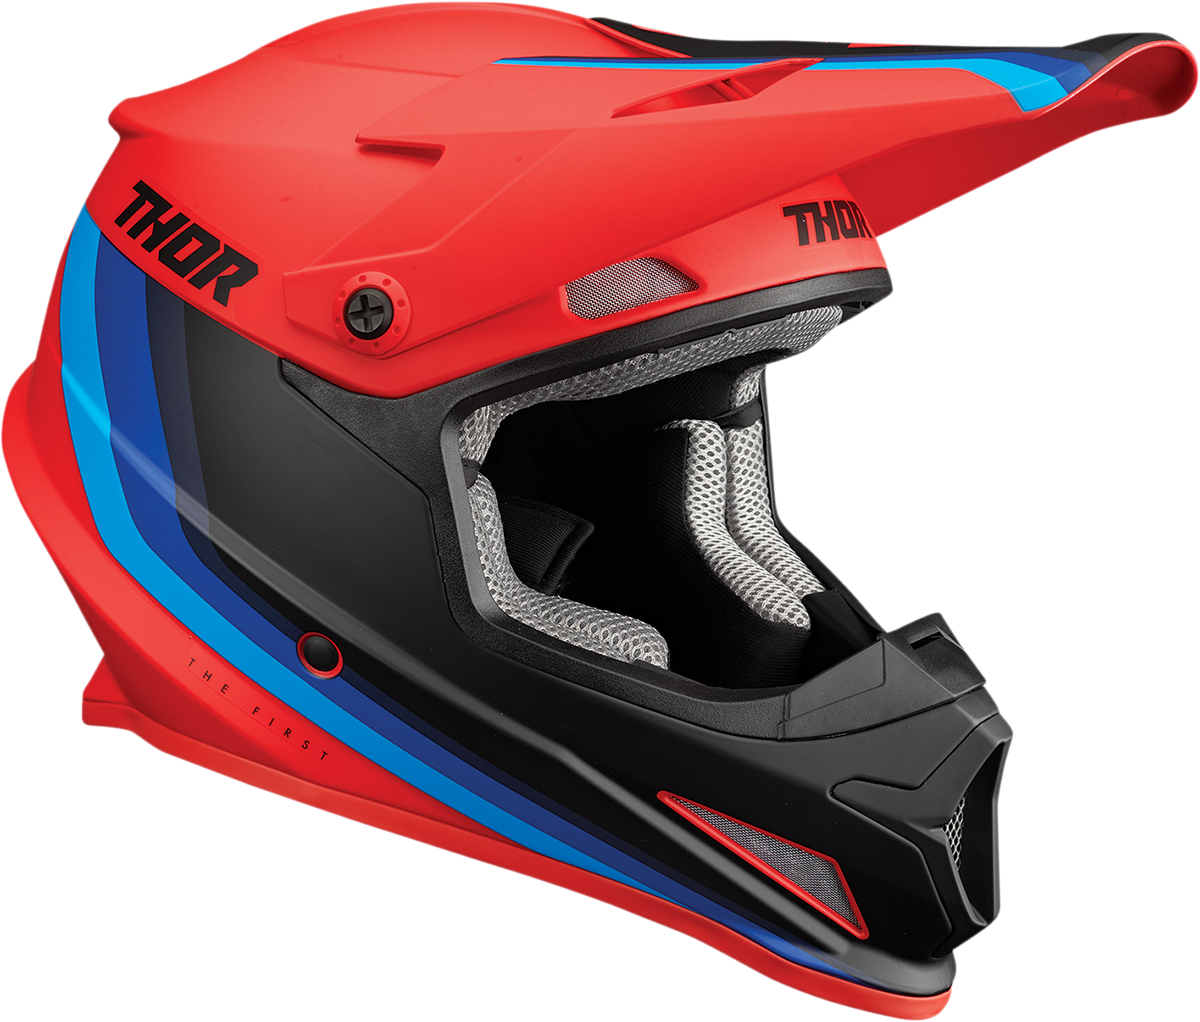 THOR Sector Helmet - Runner - MIPS? - Red/Blue - Medium 0110-7298